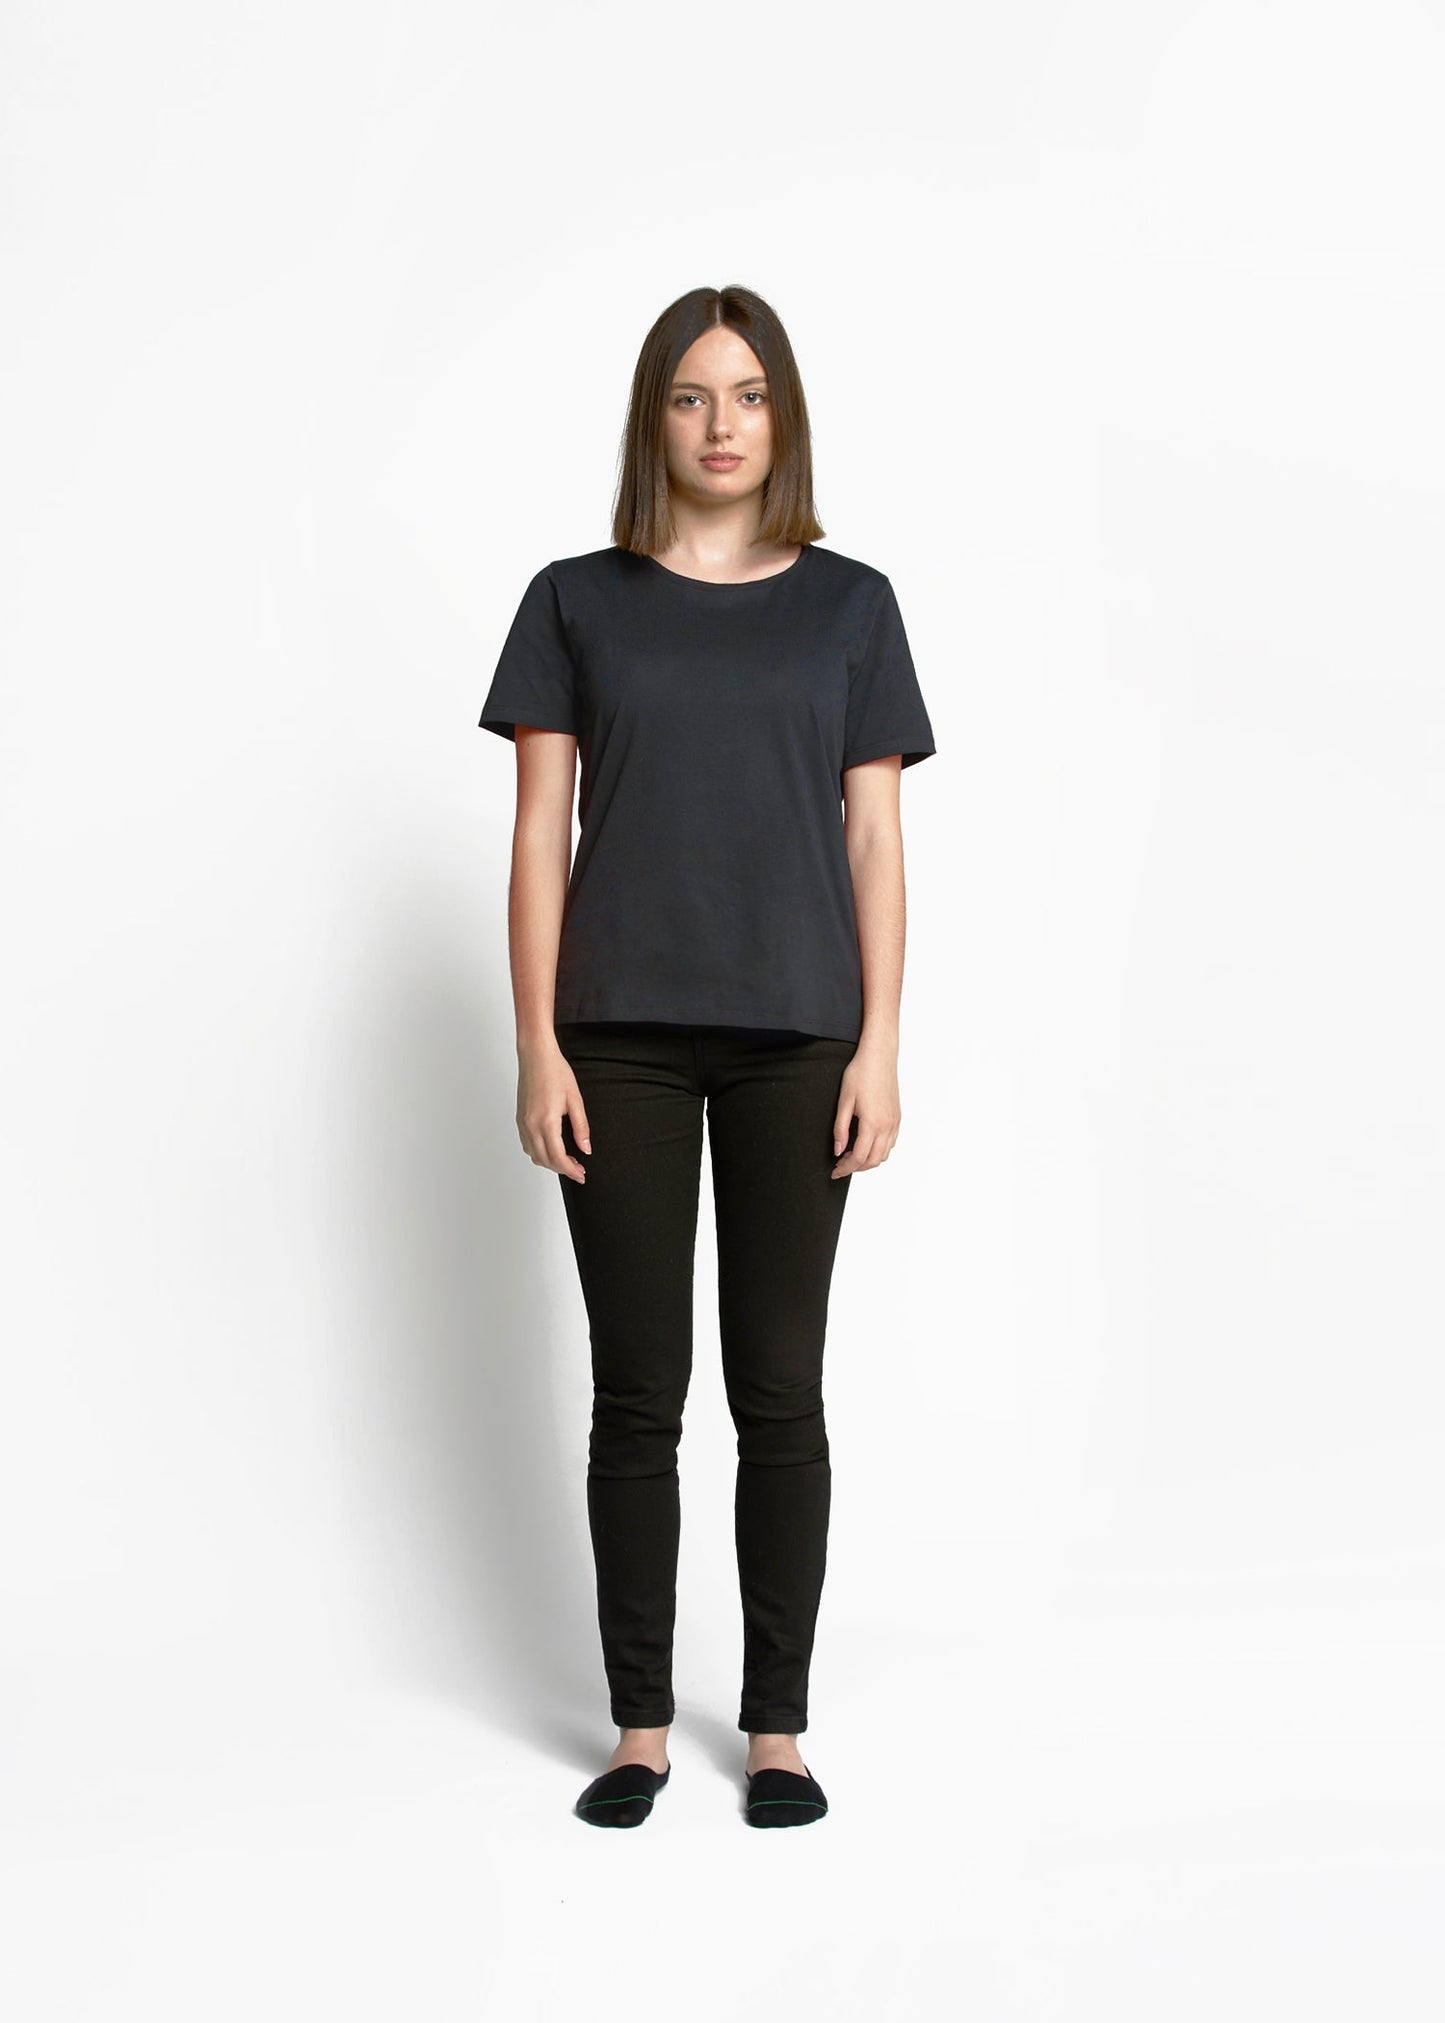 Camiseta algodón orgánico Mujer (3 unidades)